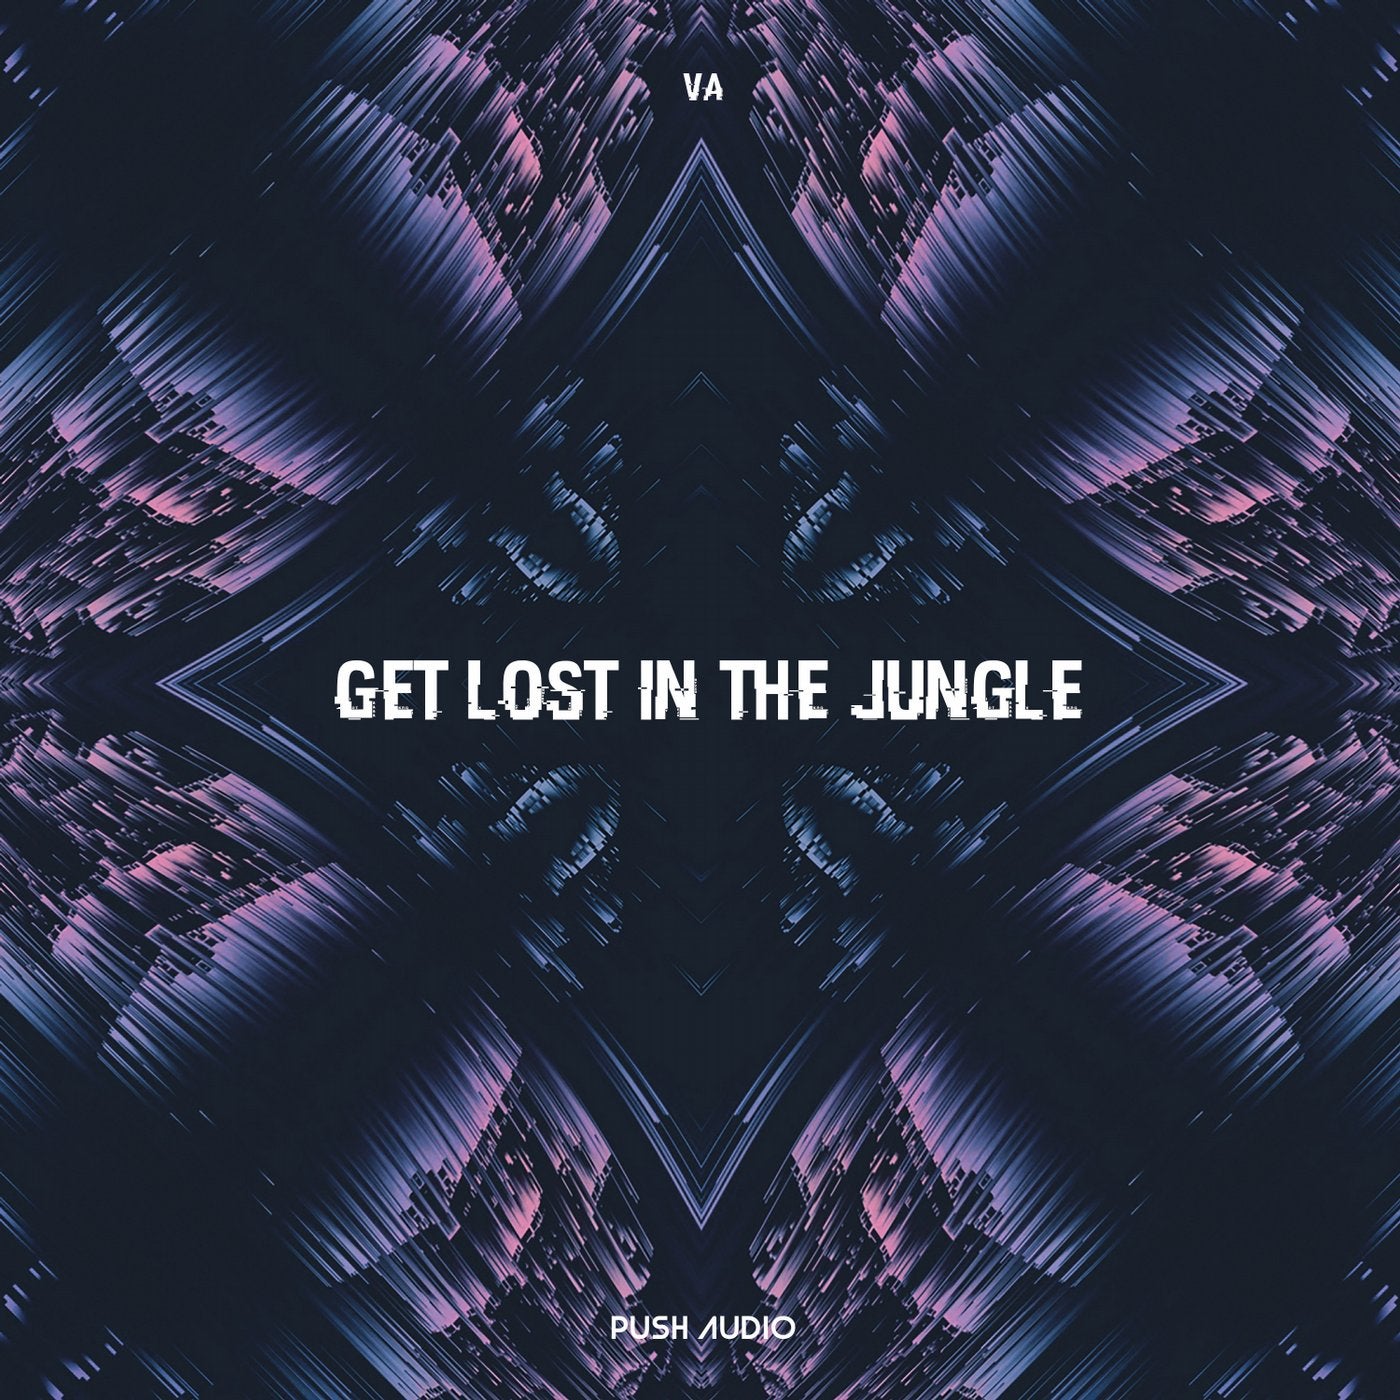 Get Lost in the Jungle